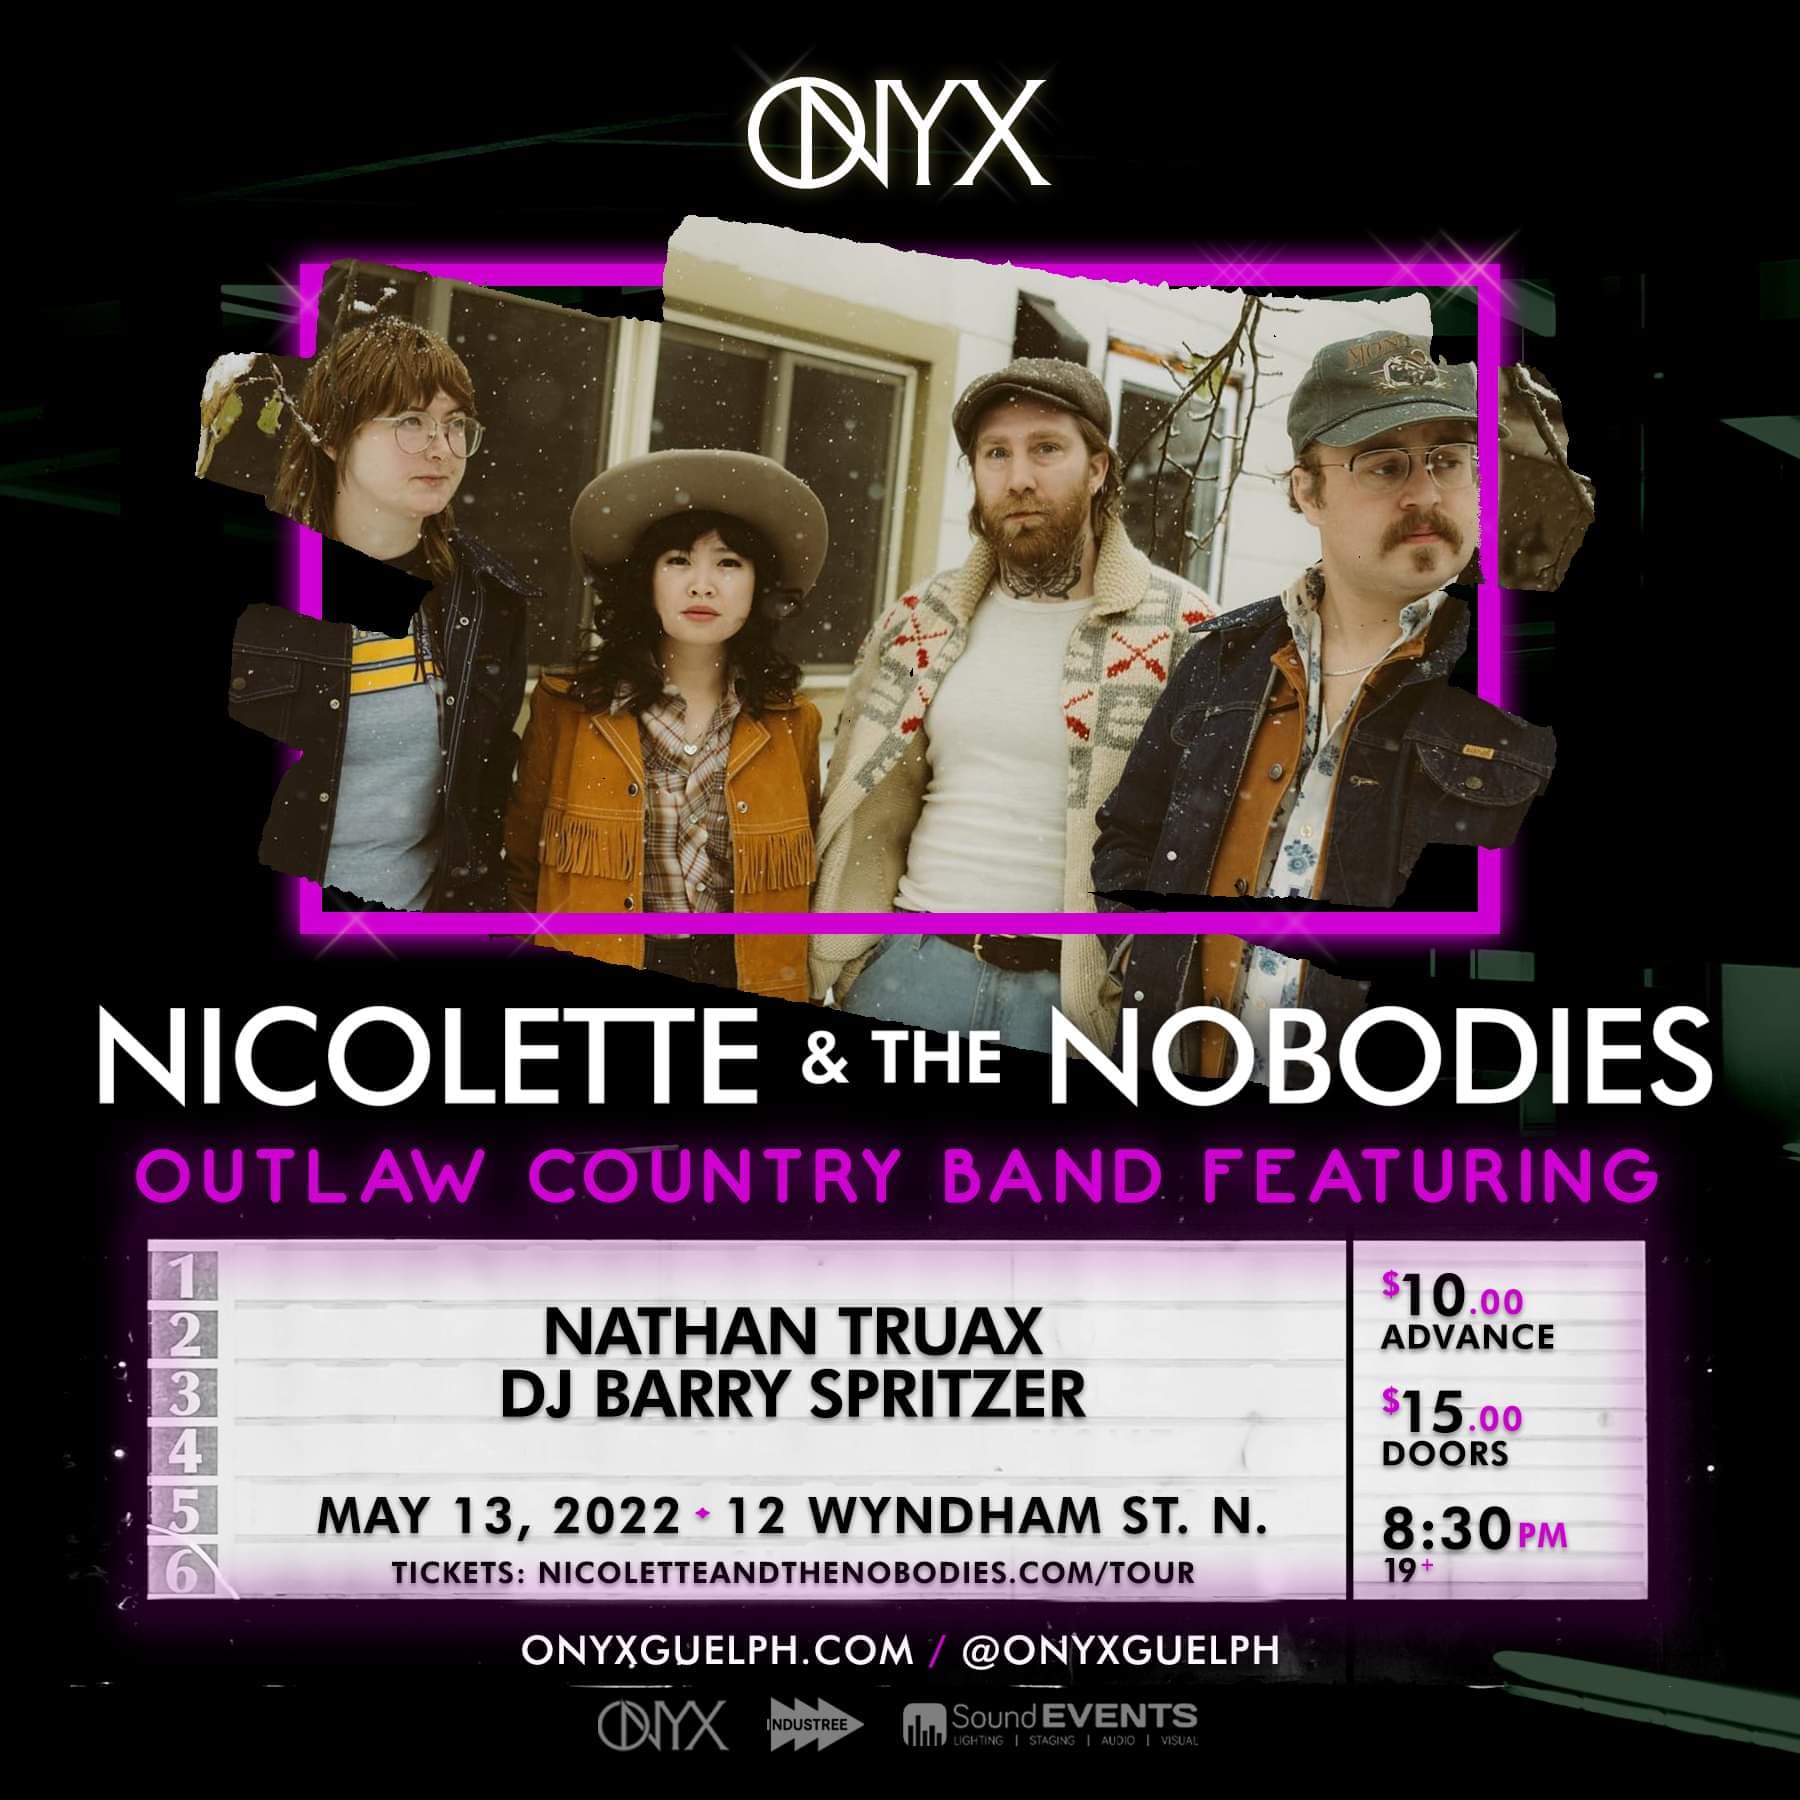 Nicolette & the Nobodies, Nathan Truax, DJ Barry Spritzer